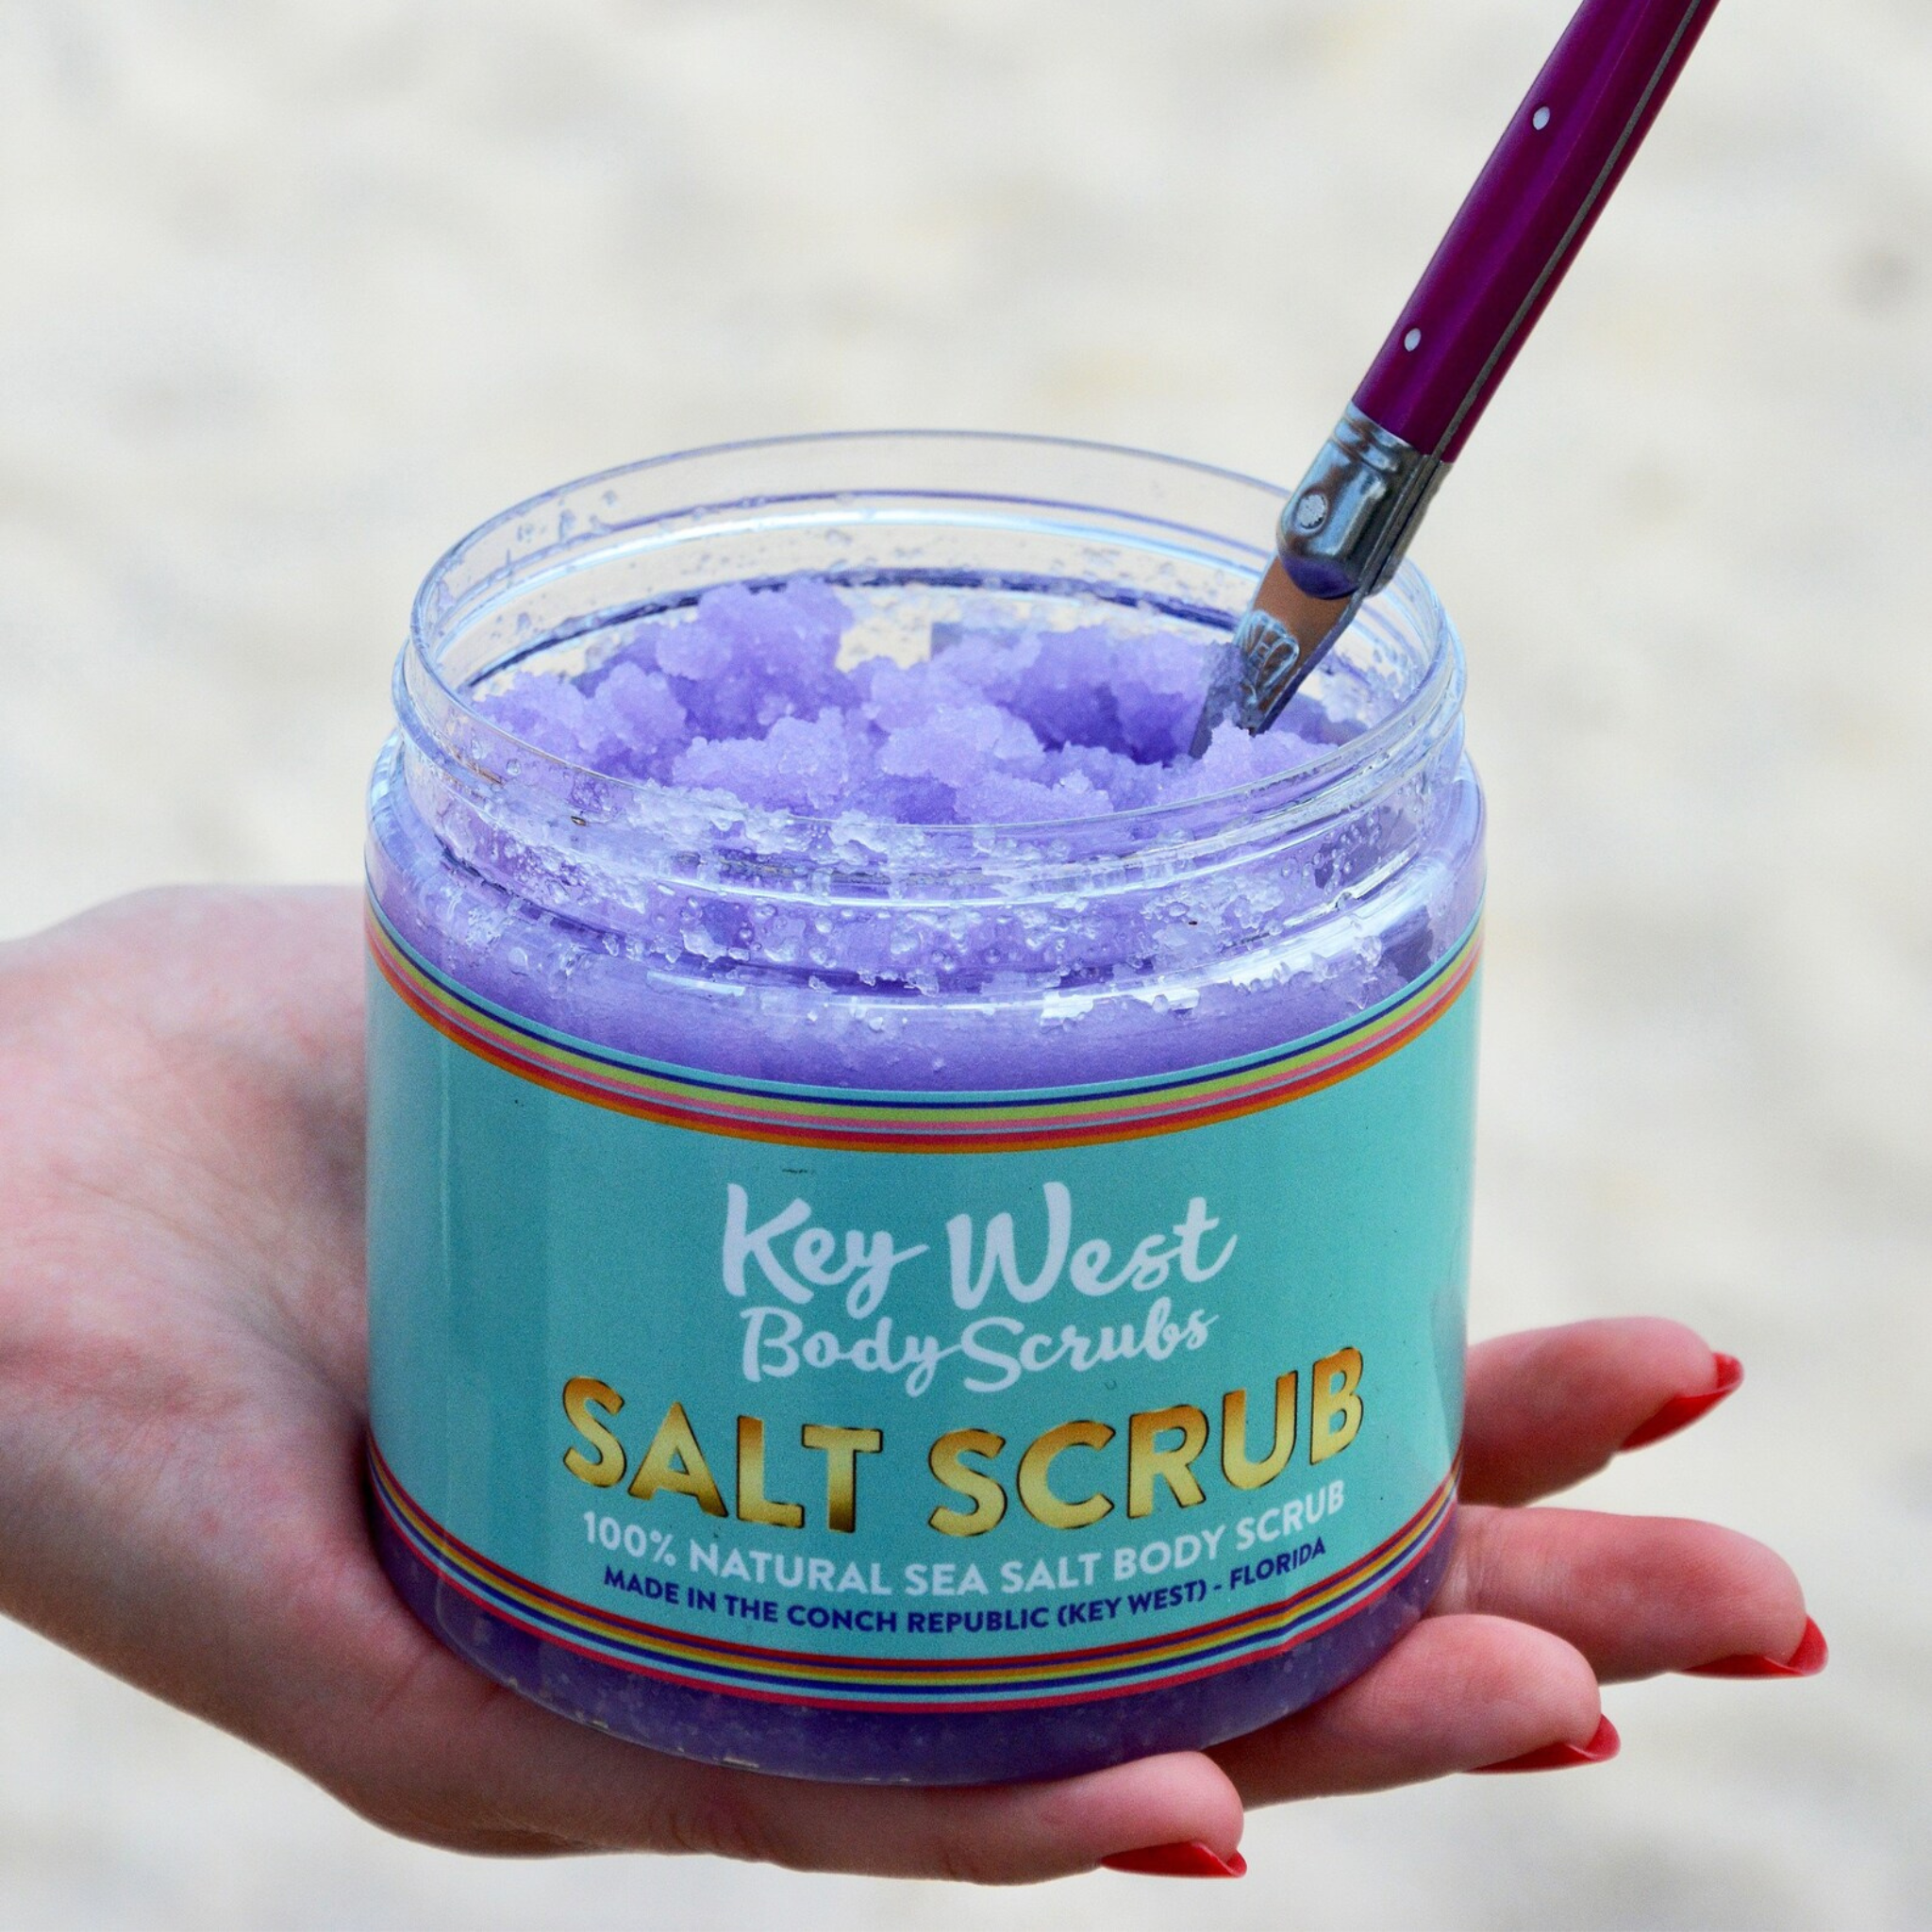 Key West Body Scrubs -Tropical Passion Fruit Salt Scrub